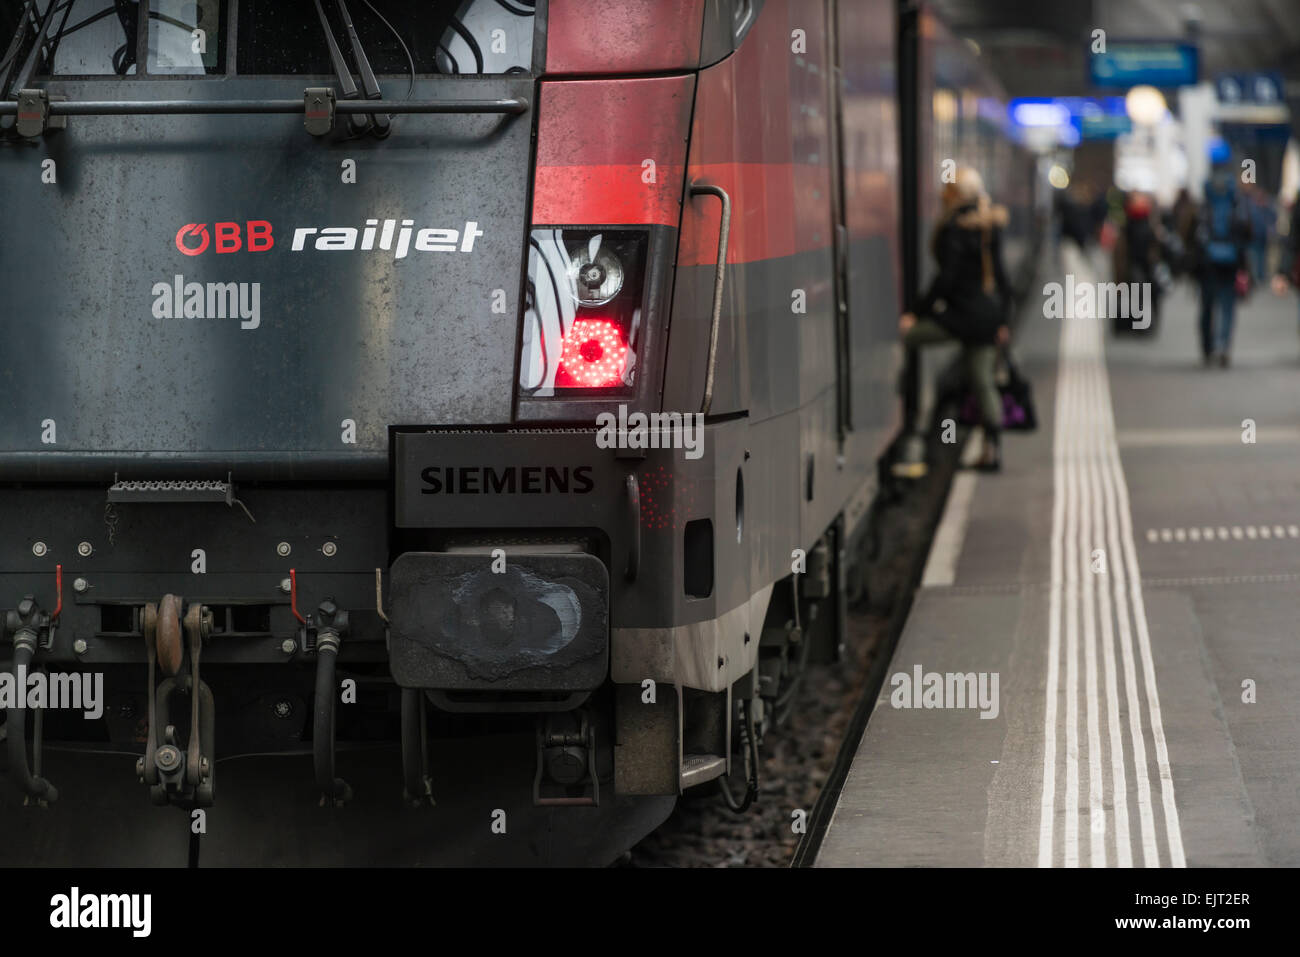 A traveler is boarding an Austrian OBB Railjet intercity train that is waiting on a platform on Zurich (Switzerland) station. Stock Photo